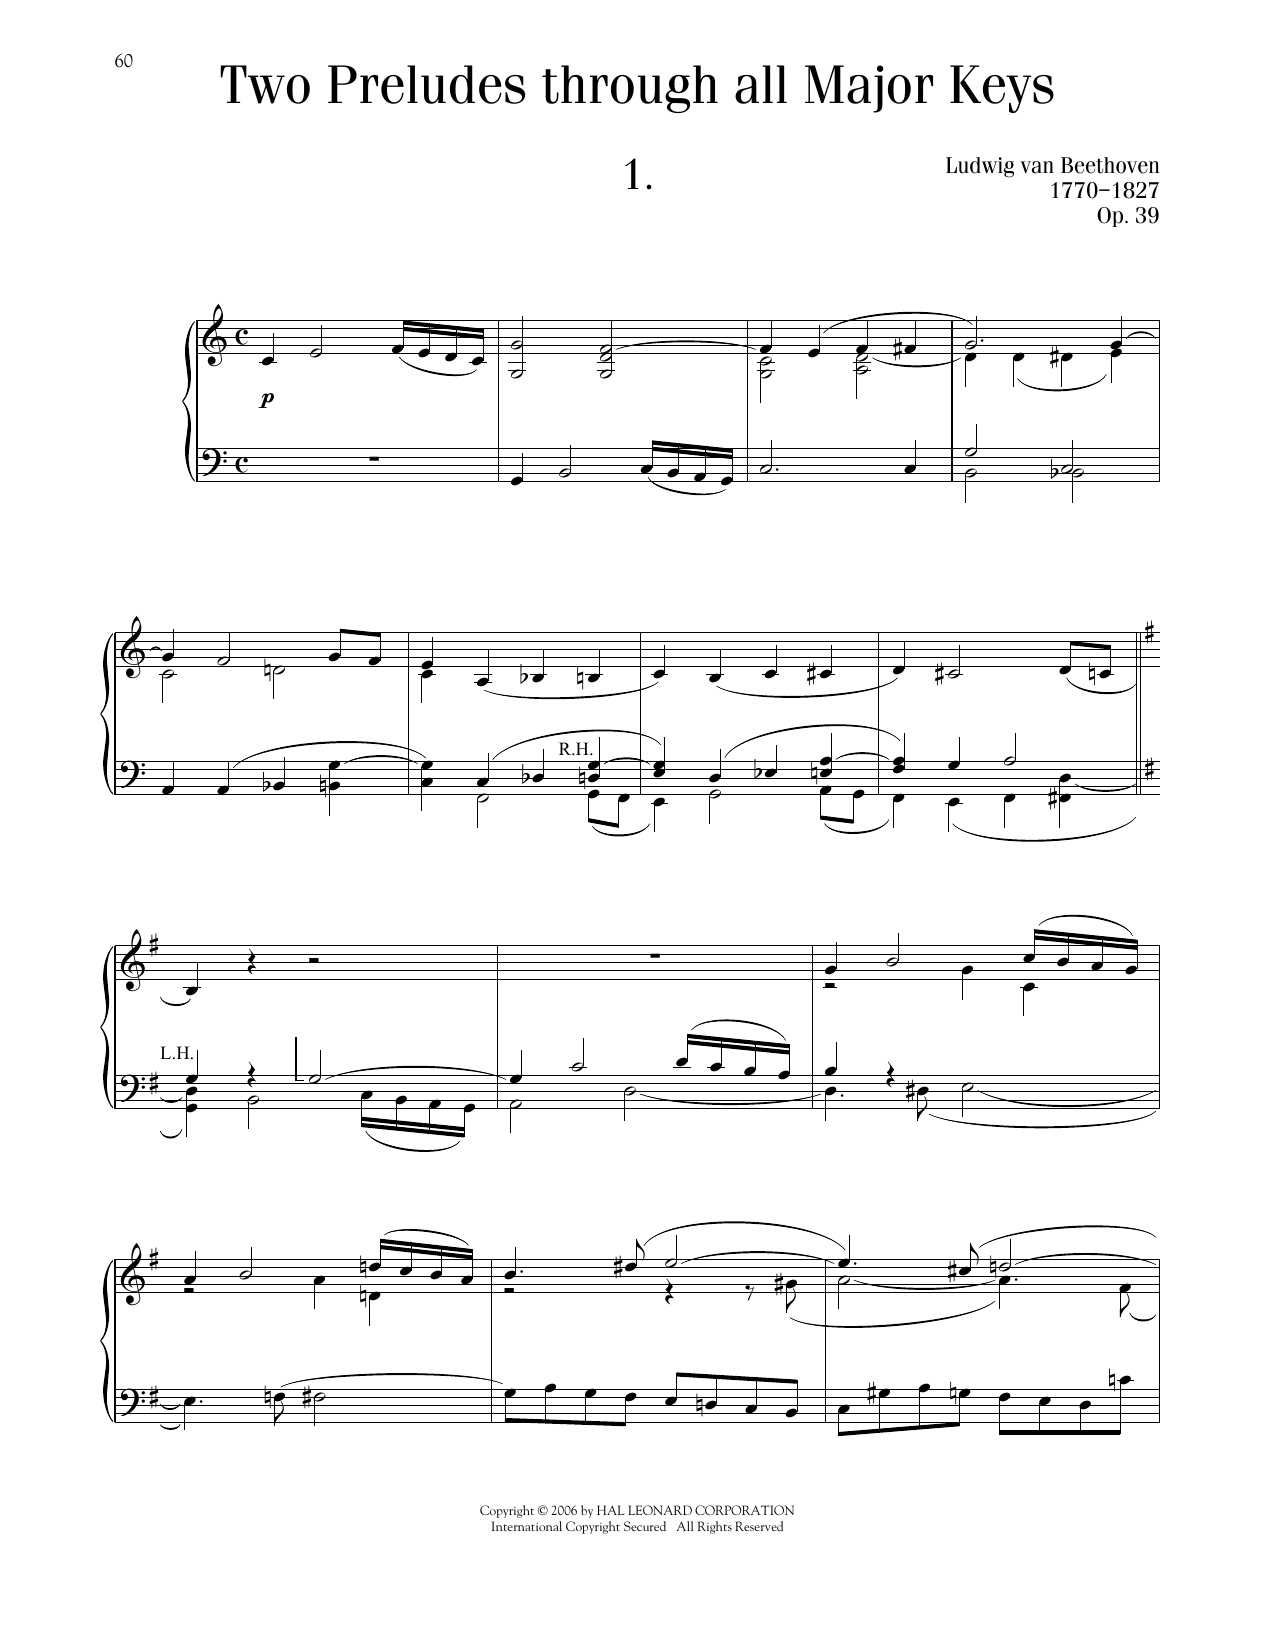 Ludwig van Beethoven Two Preludes, Through All 12 Major Keys, Op. 39 sheet music notes printable PDF score